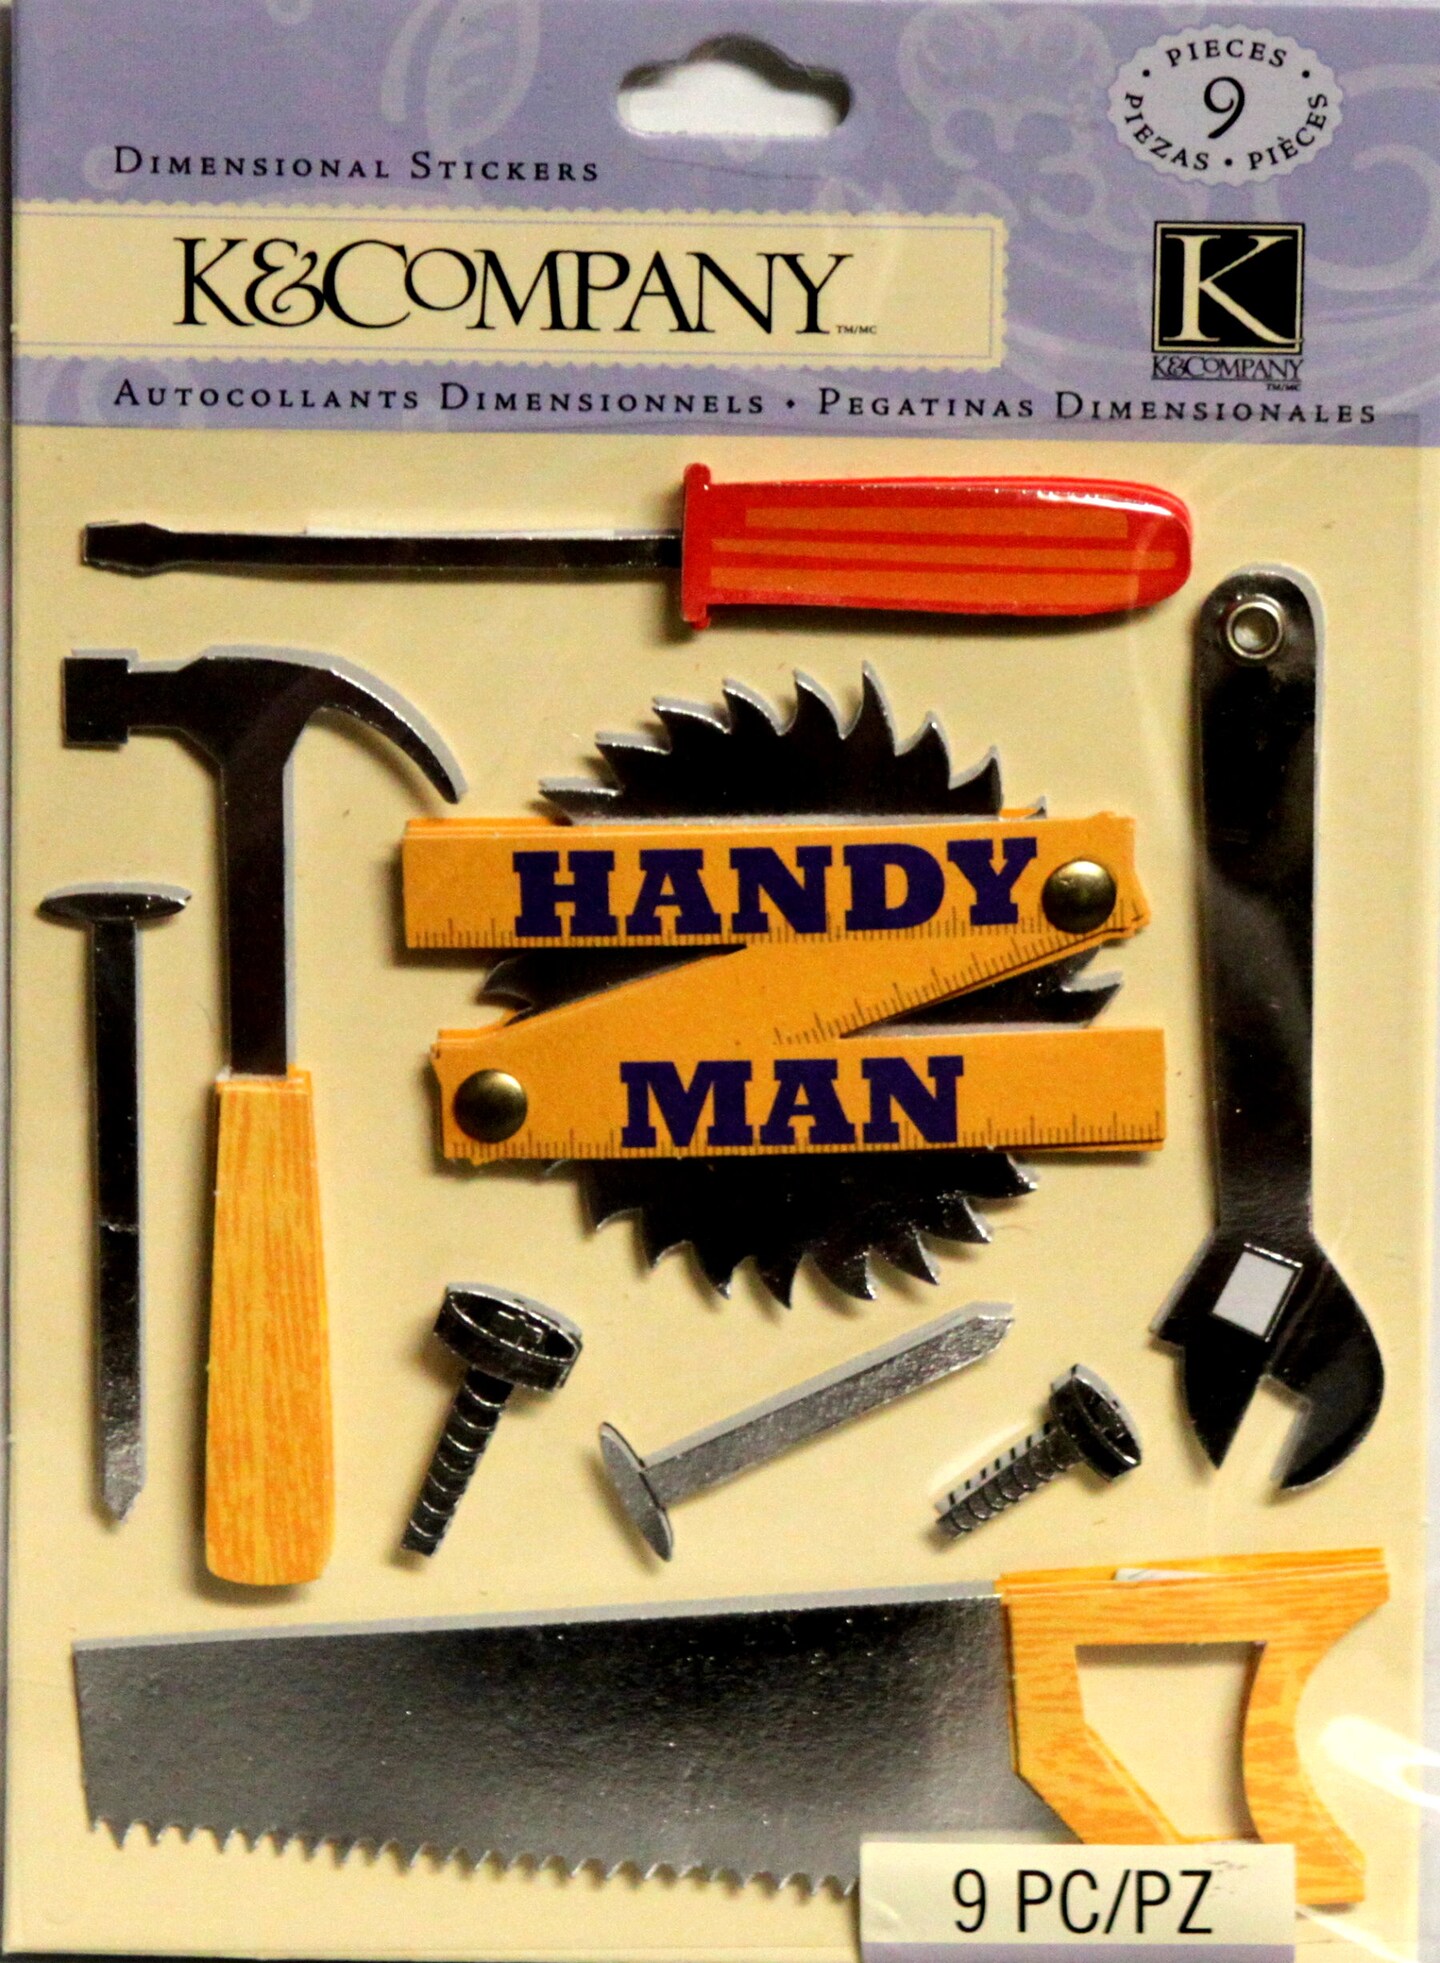 K &#x26; Company Handy Man Dimensional Stickers